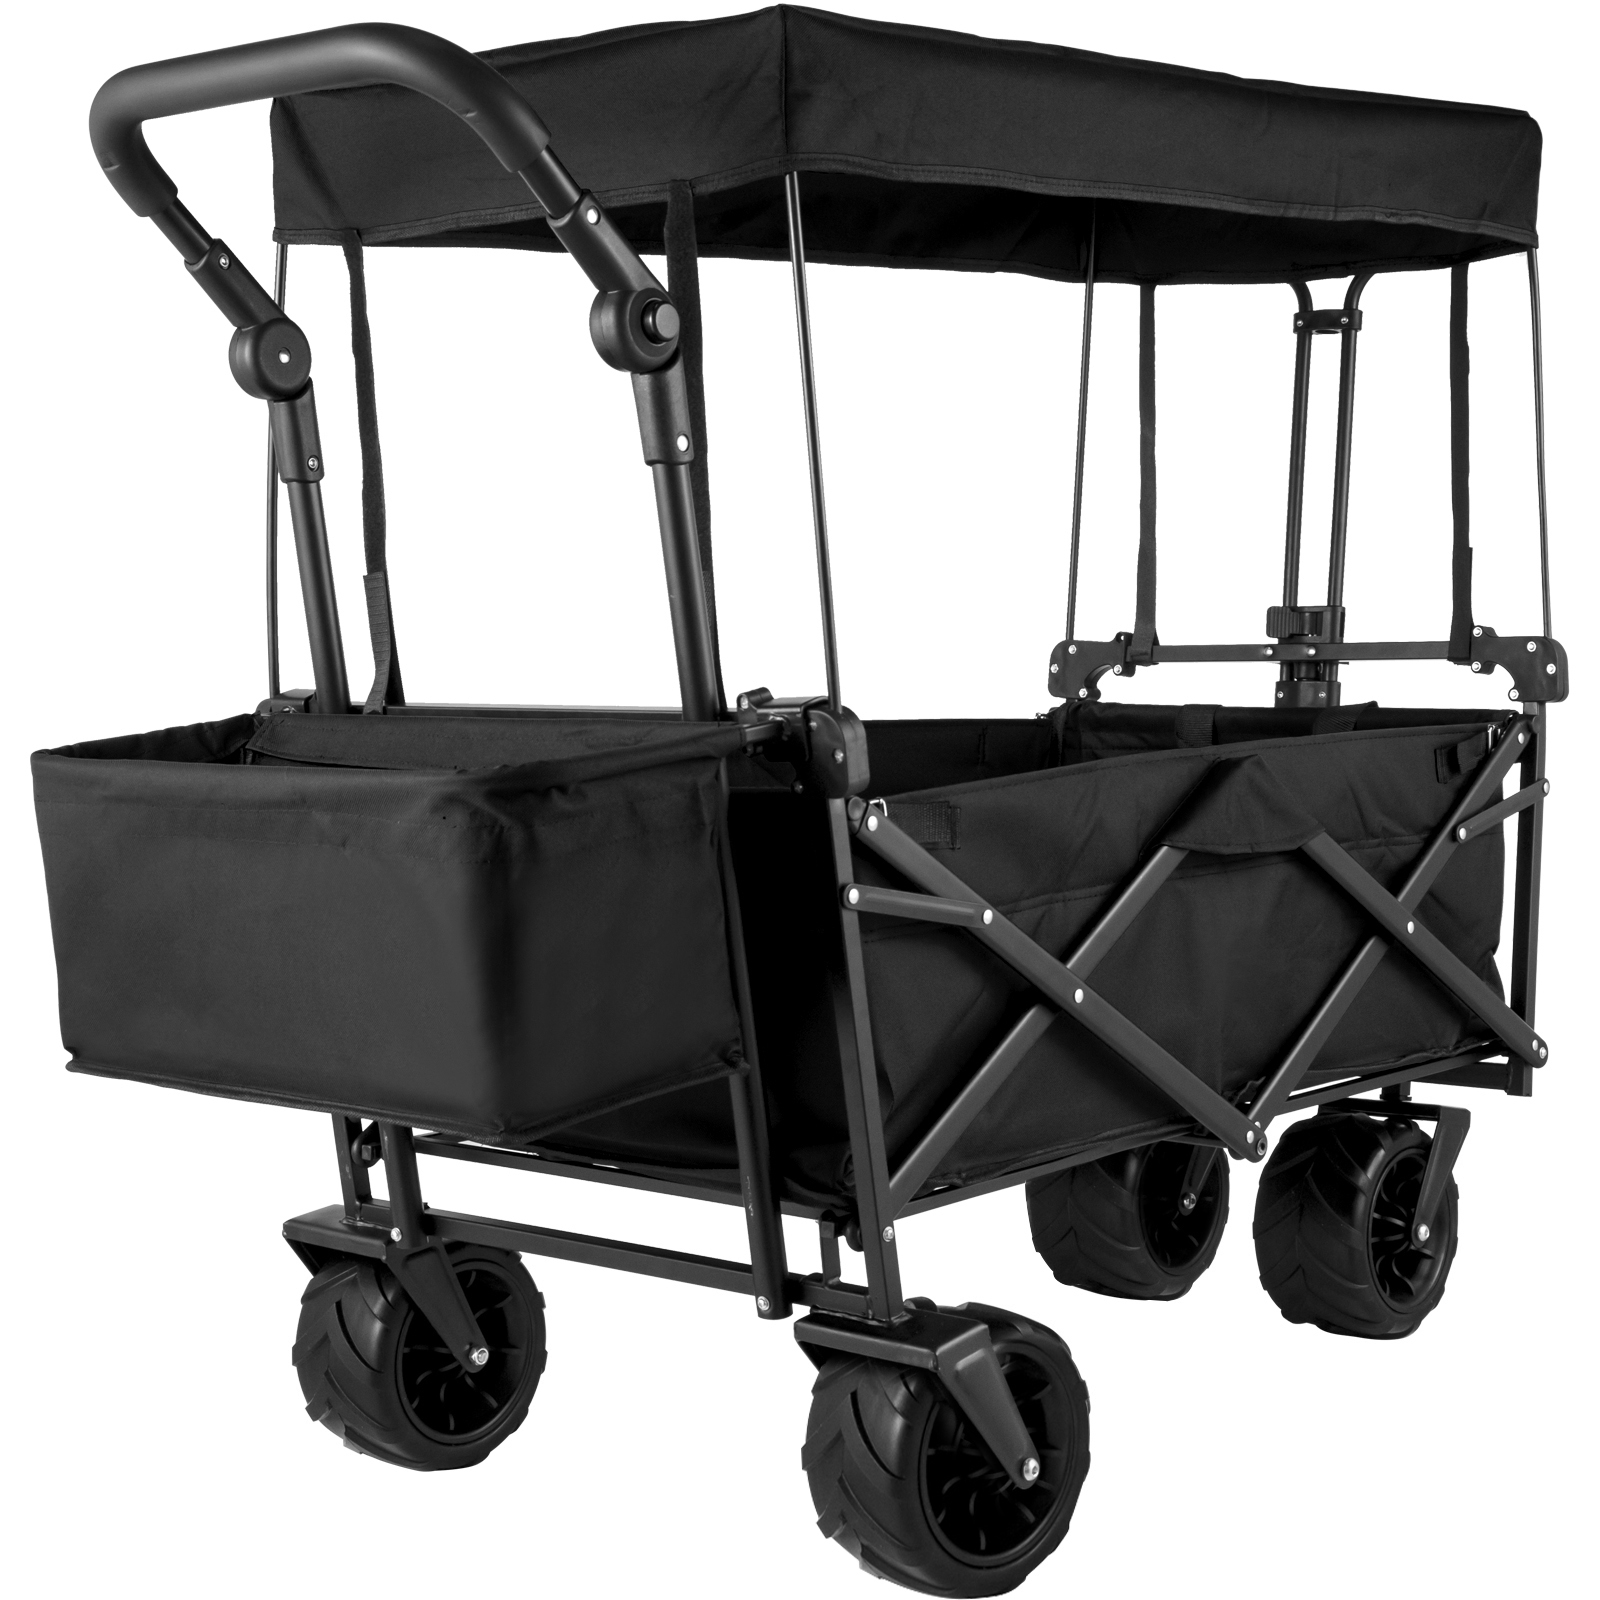 Beach cart with Drink Holder Blue Folding Garden Wagon Shopping Beach Wagon for Garden Work Picnic or Beach Collapsible Outdoor Utility Wagon 